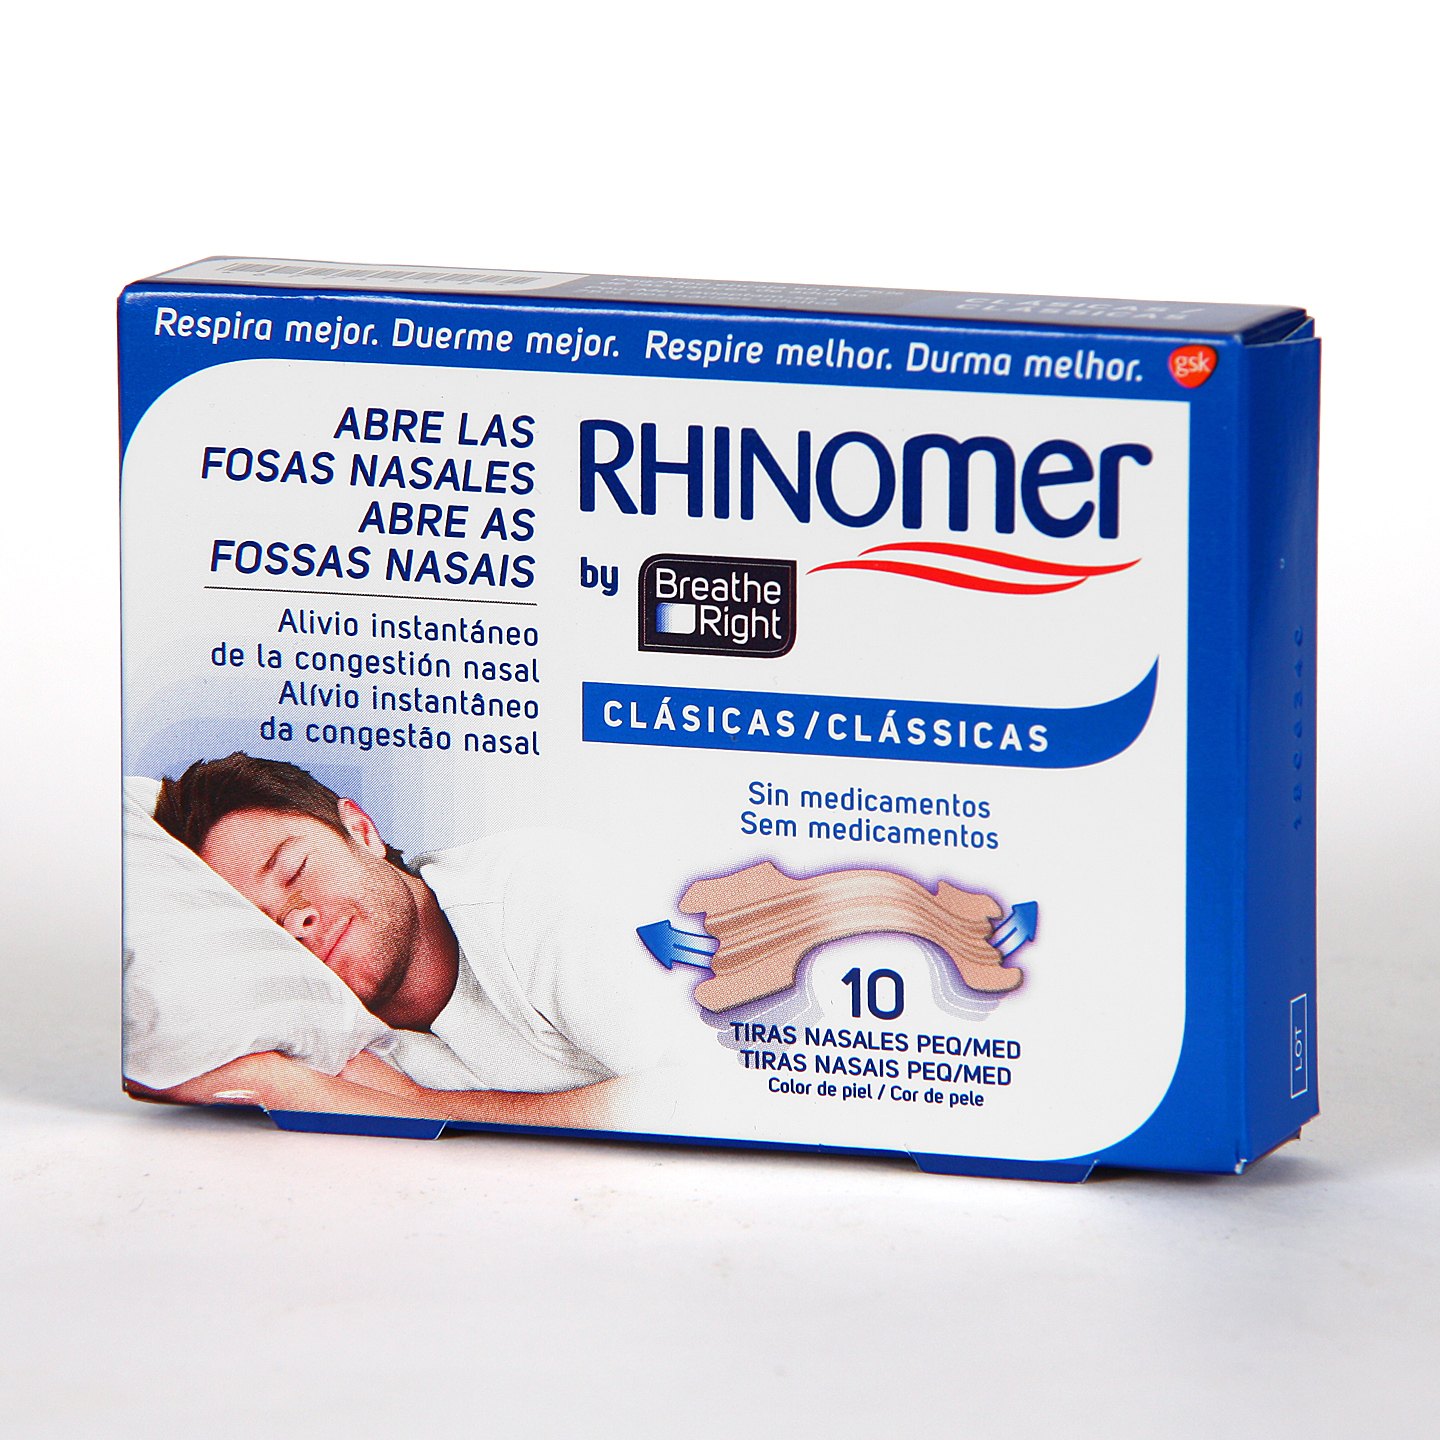 Rhinomer Breathe Right Tiras Clásicas Nasales Grandes, 30 unidades